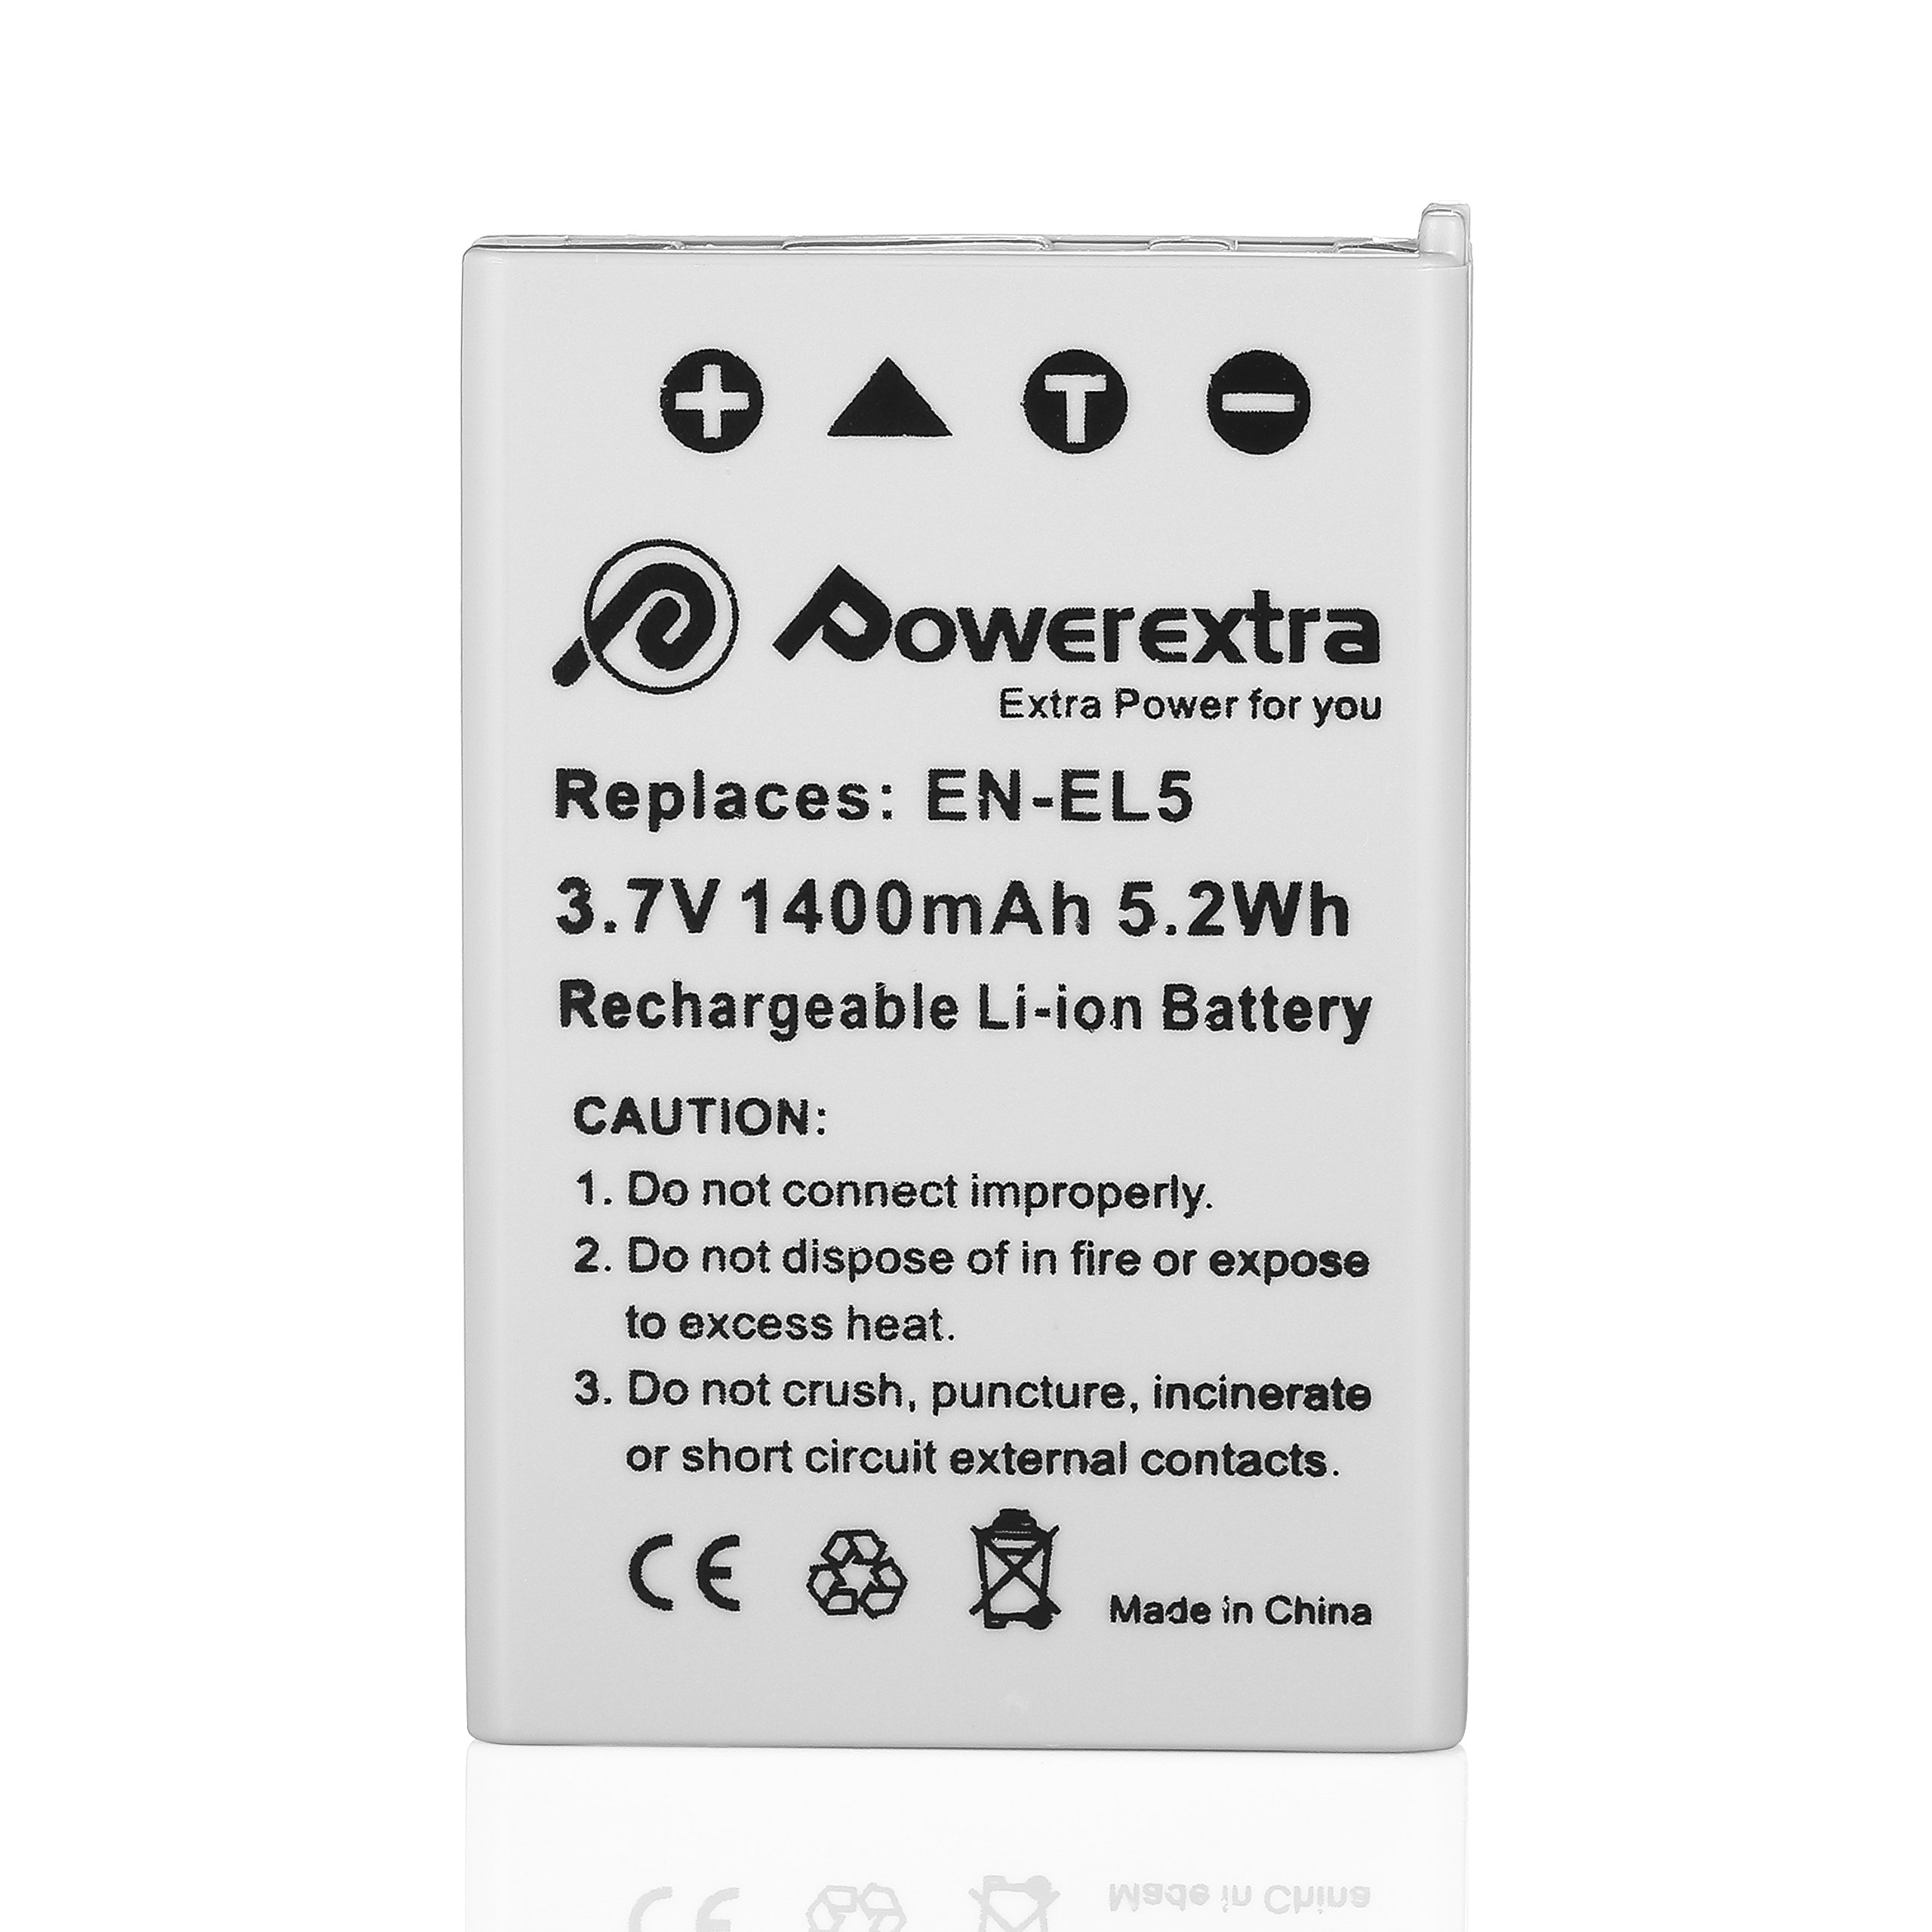 Powerextra 2 x EN-EL5 Replacement Nikon Battery Compatible with Nikon CoolPix 3700, 4200, 5200, 5900, 7900, P3, P4, P80, P90, P100, P500, P510, P520, P530, P5000, P5100, P6000, S10